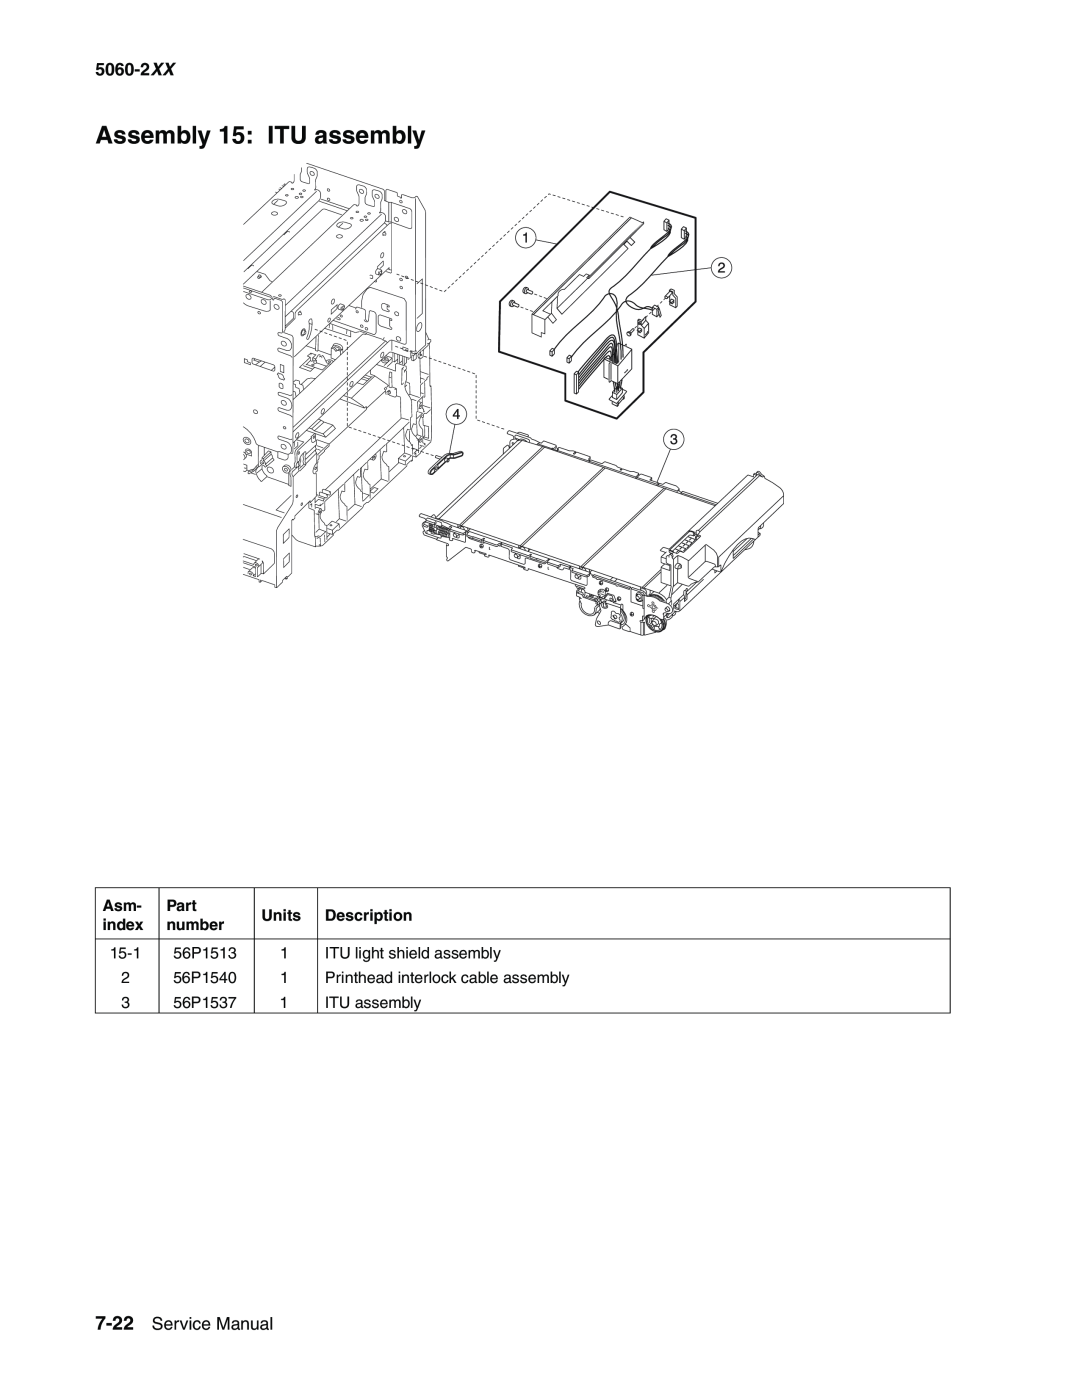 Lexmark 5060-2XX manual Assembly 15 ITU assembly, Service Manual, Part, Units, Description, index, number 